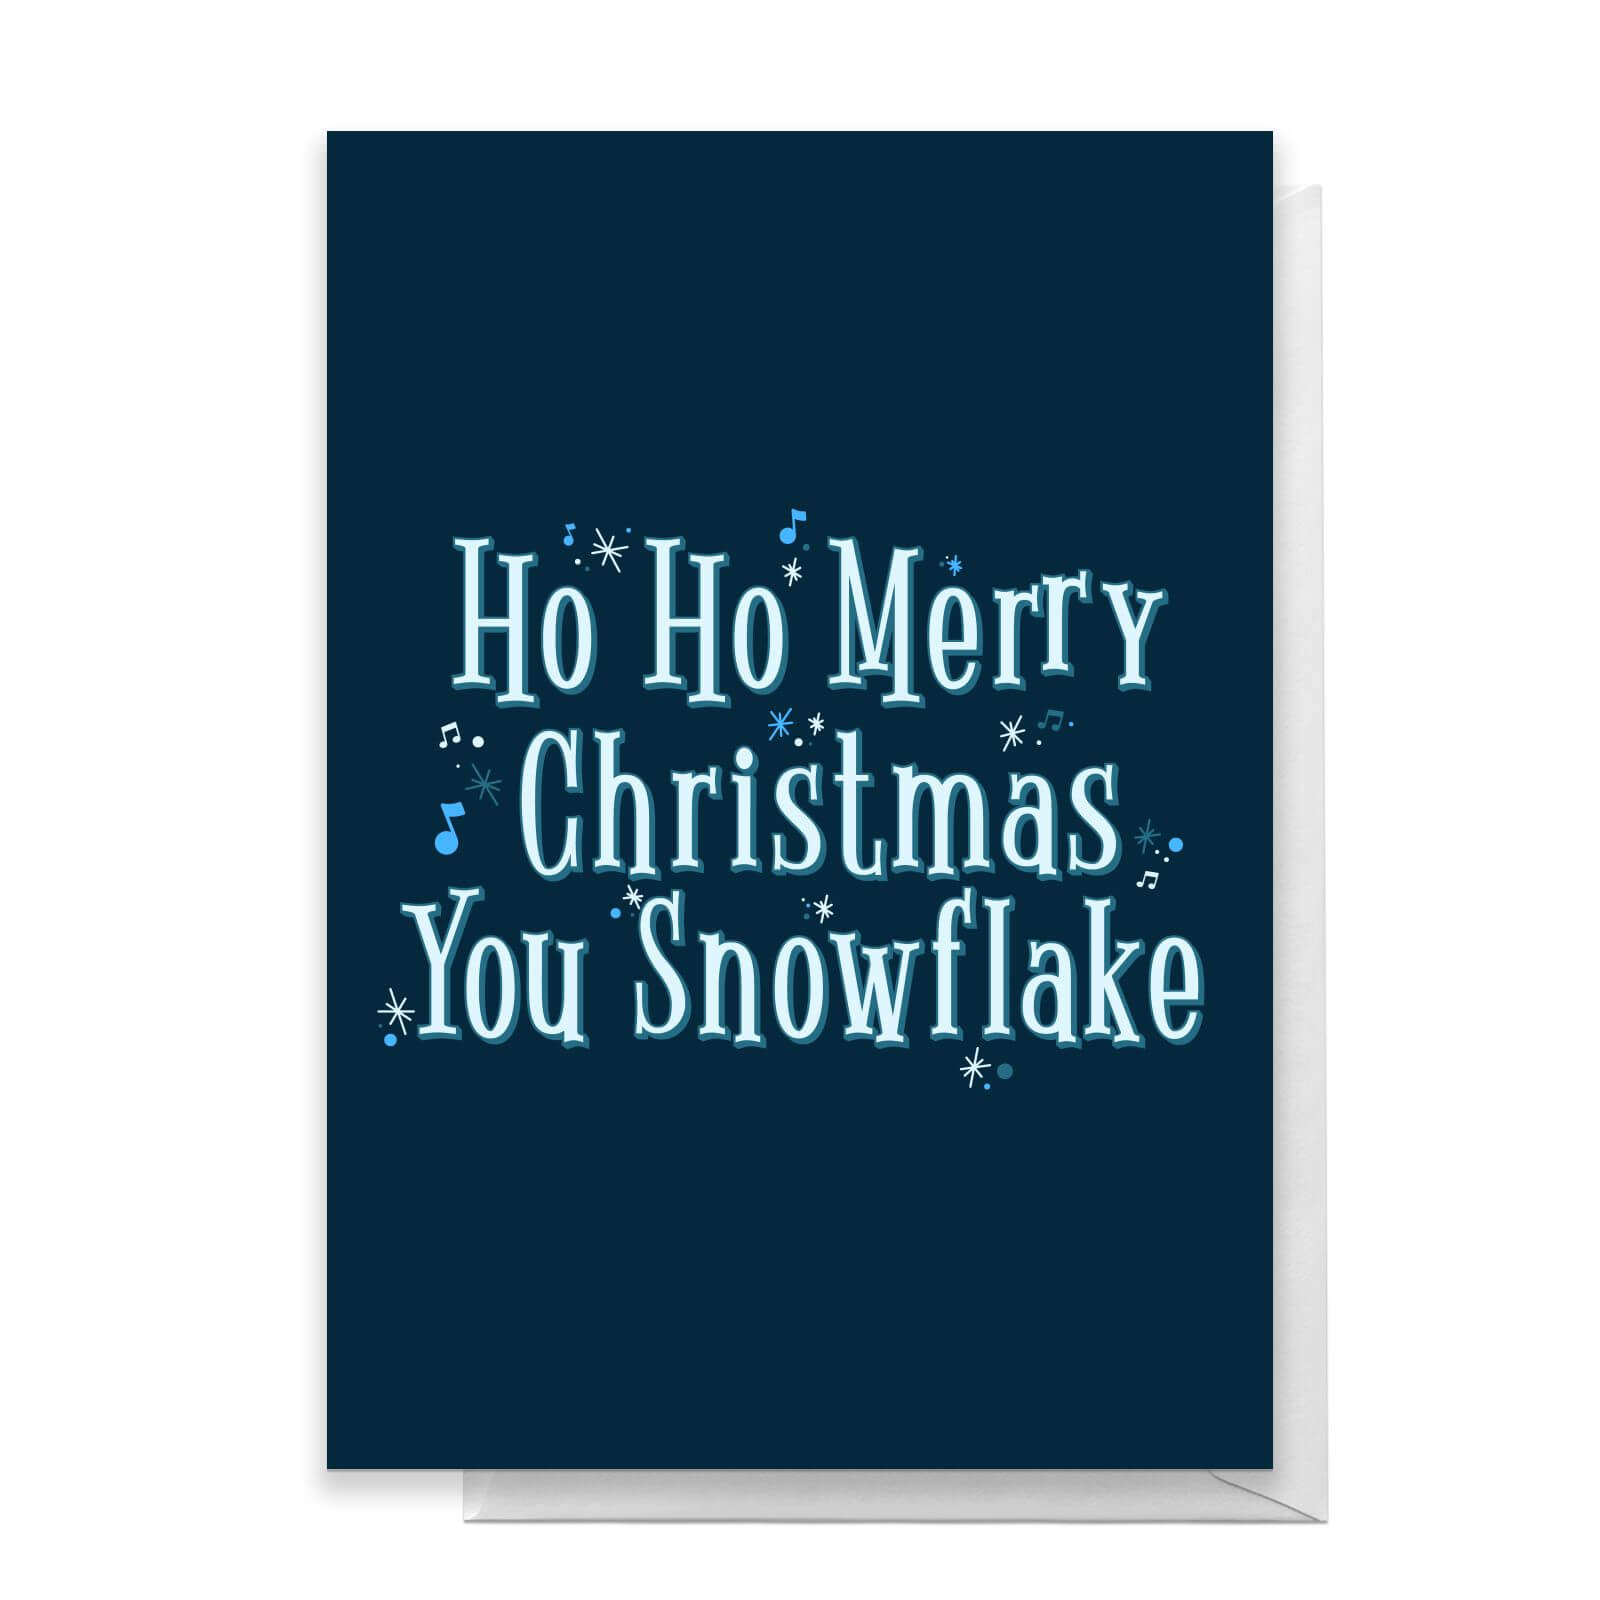 Ho Ho Merry Christmas You Snowflake Greetings Card - Standard Card